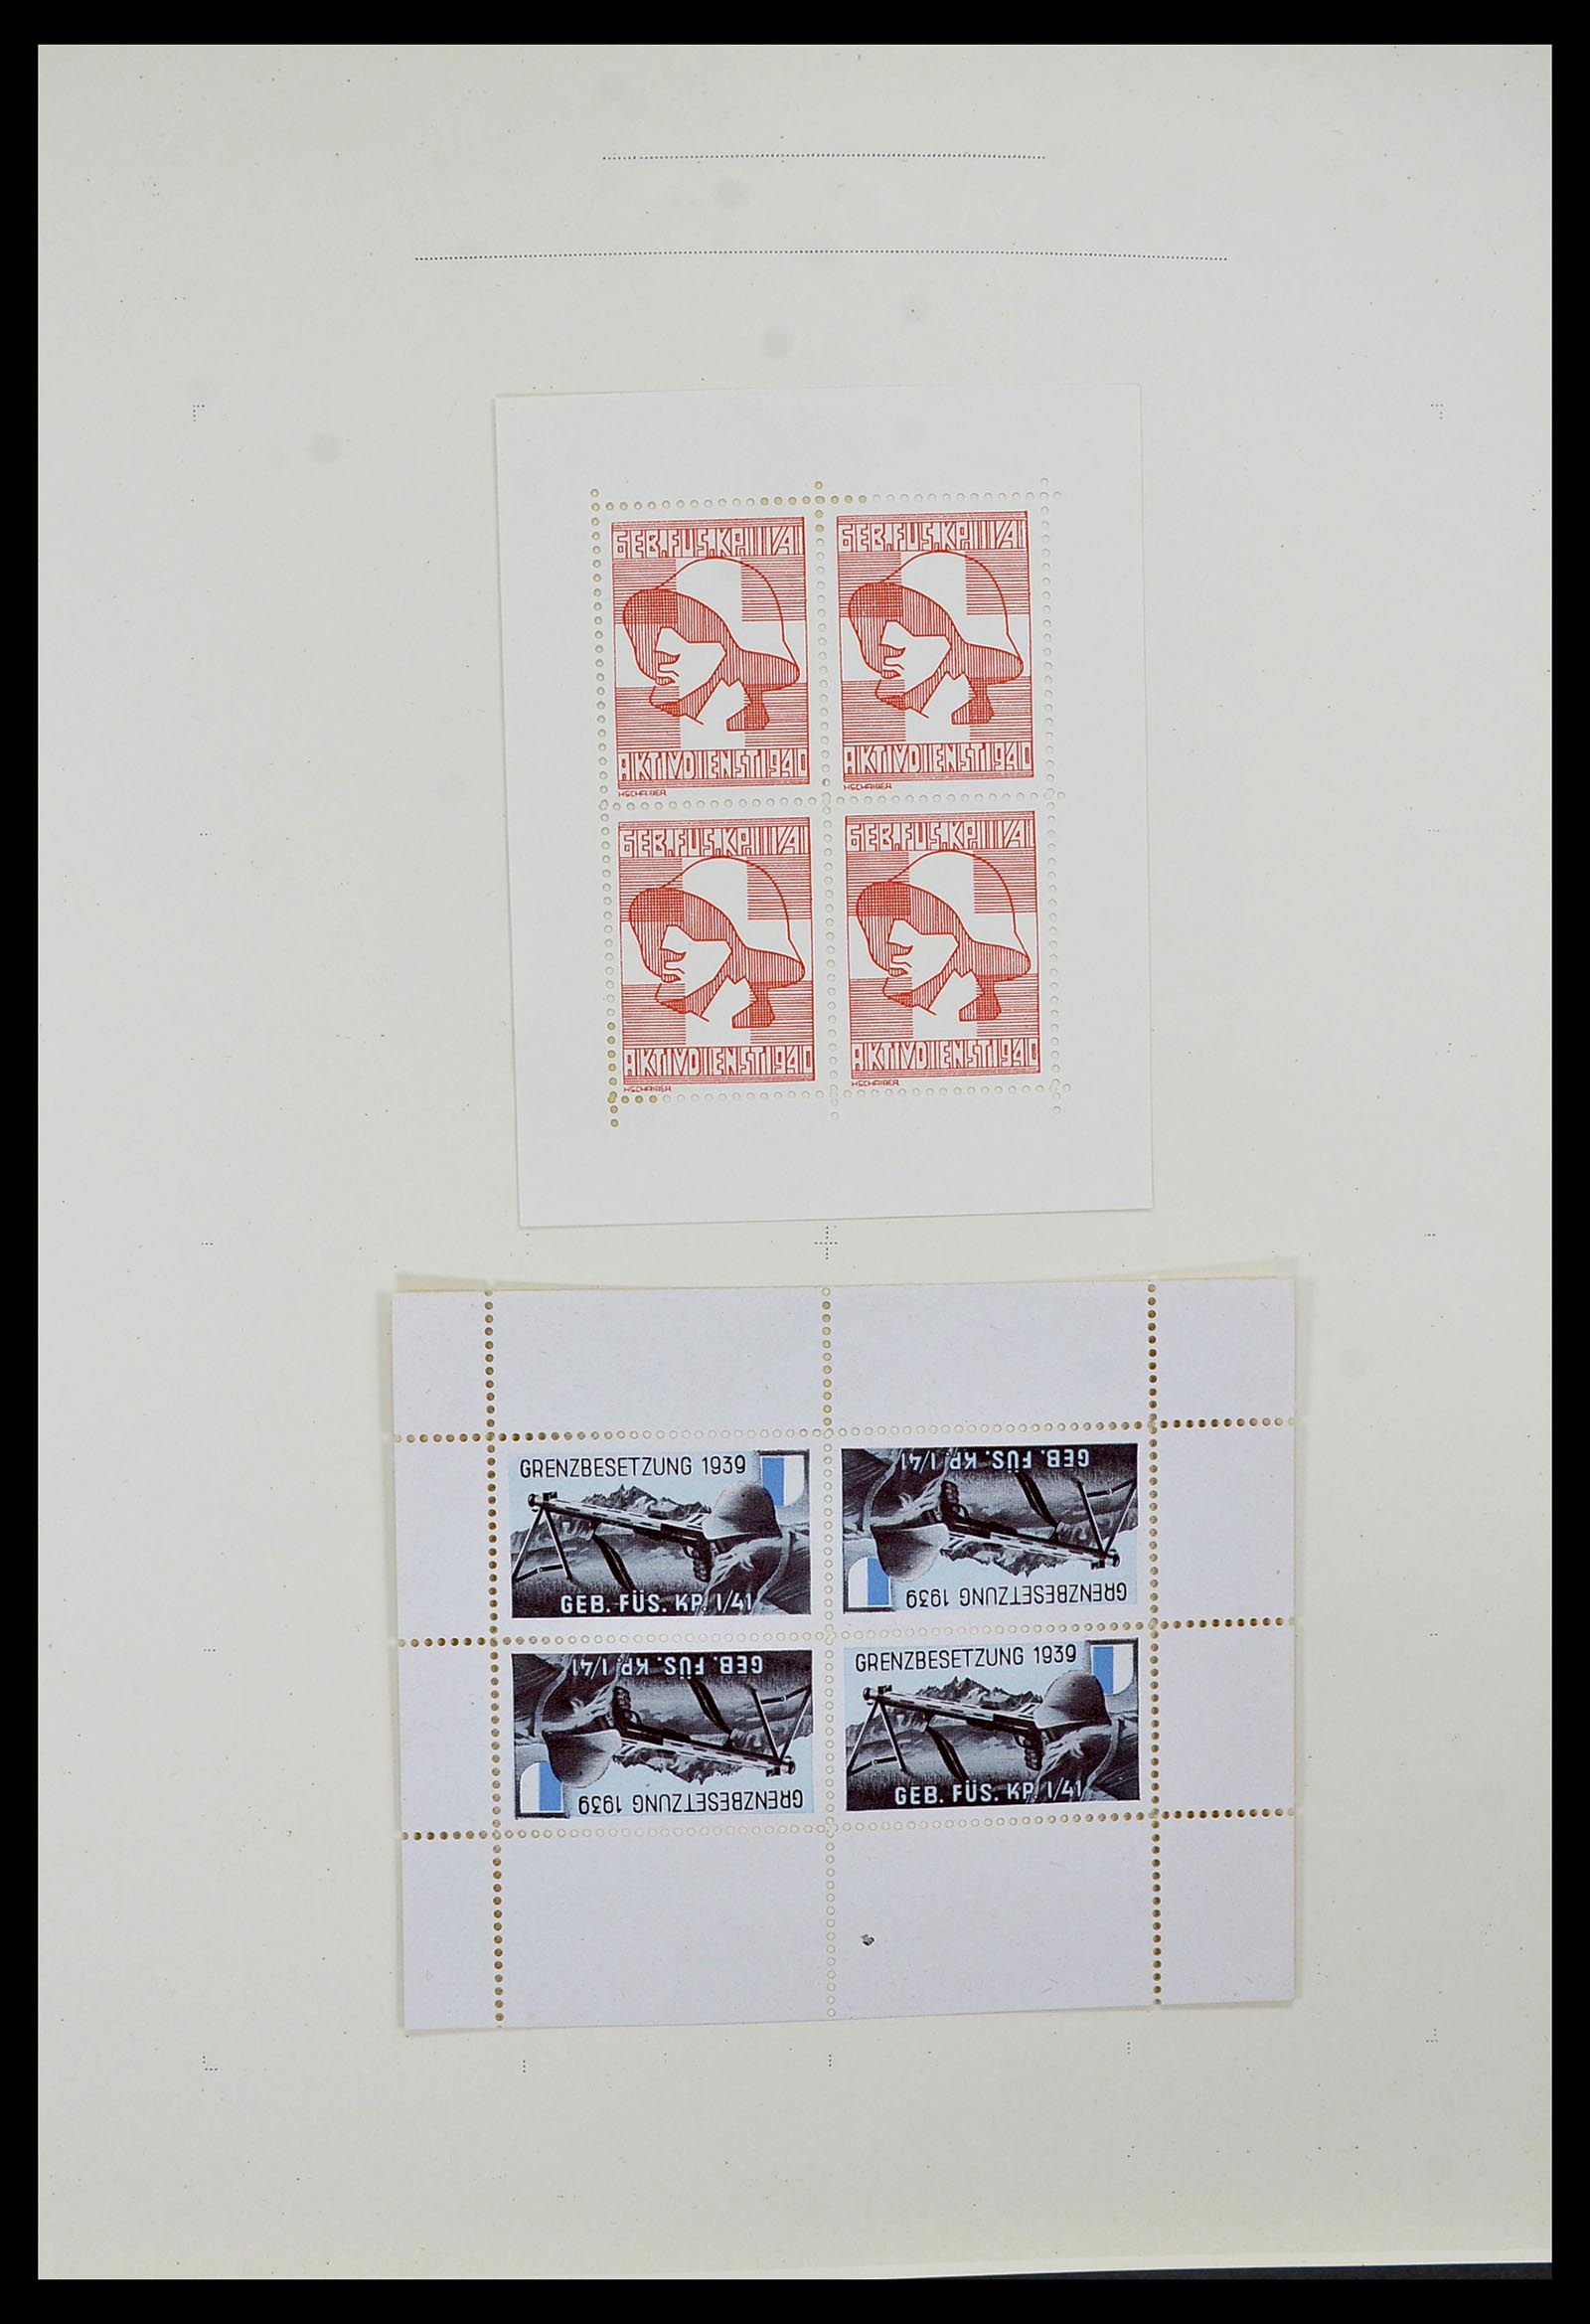 34234 043 - Stamp collection 34234 Switzerland soldier stamps 1939-1945.